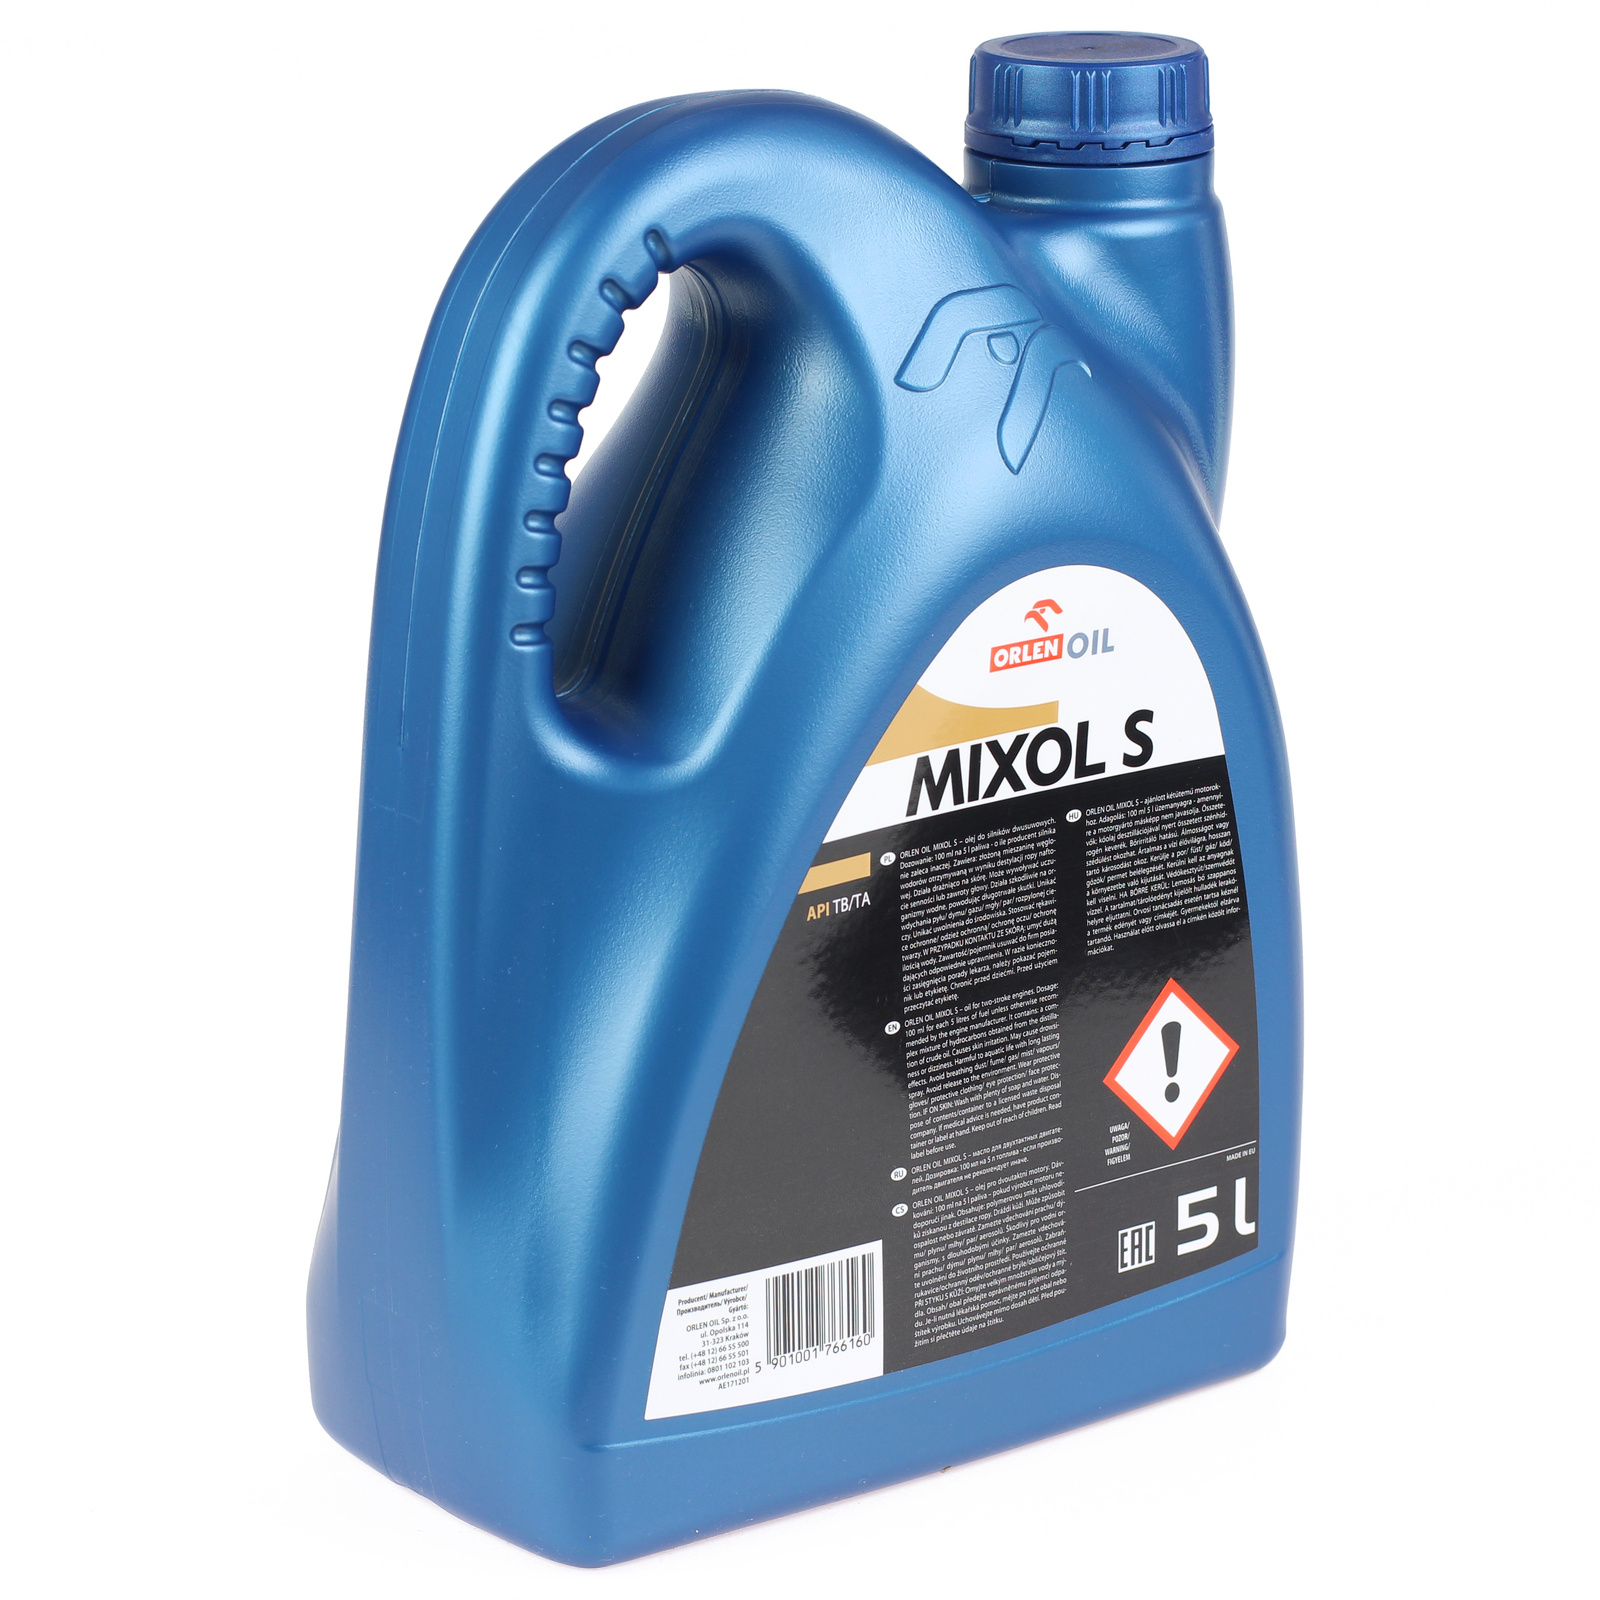 Бензиновое масло Orlen Mixol S 5L